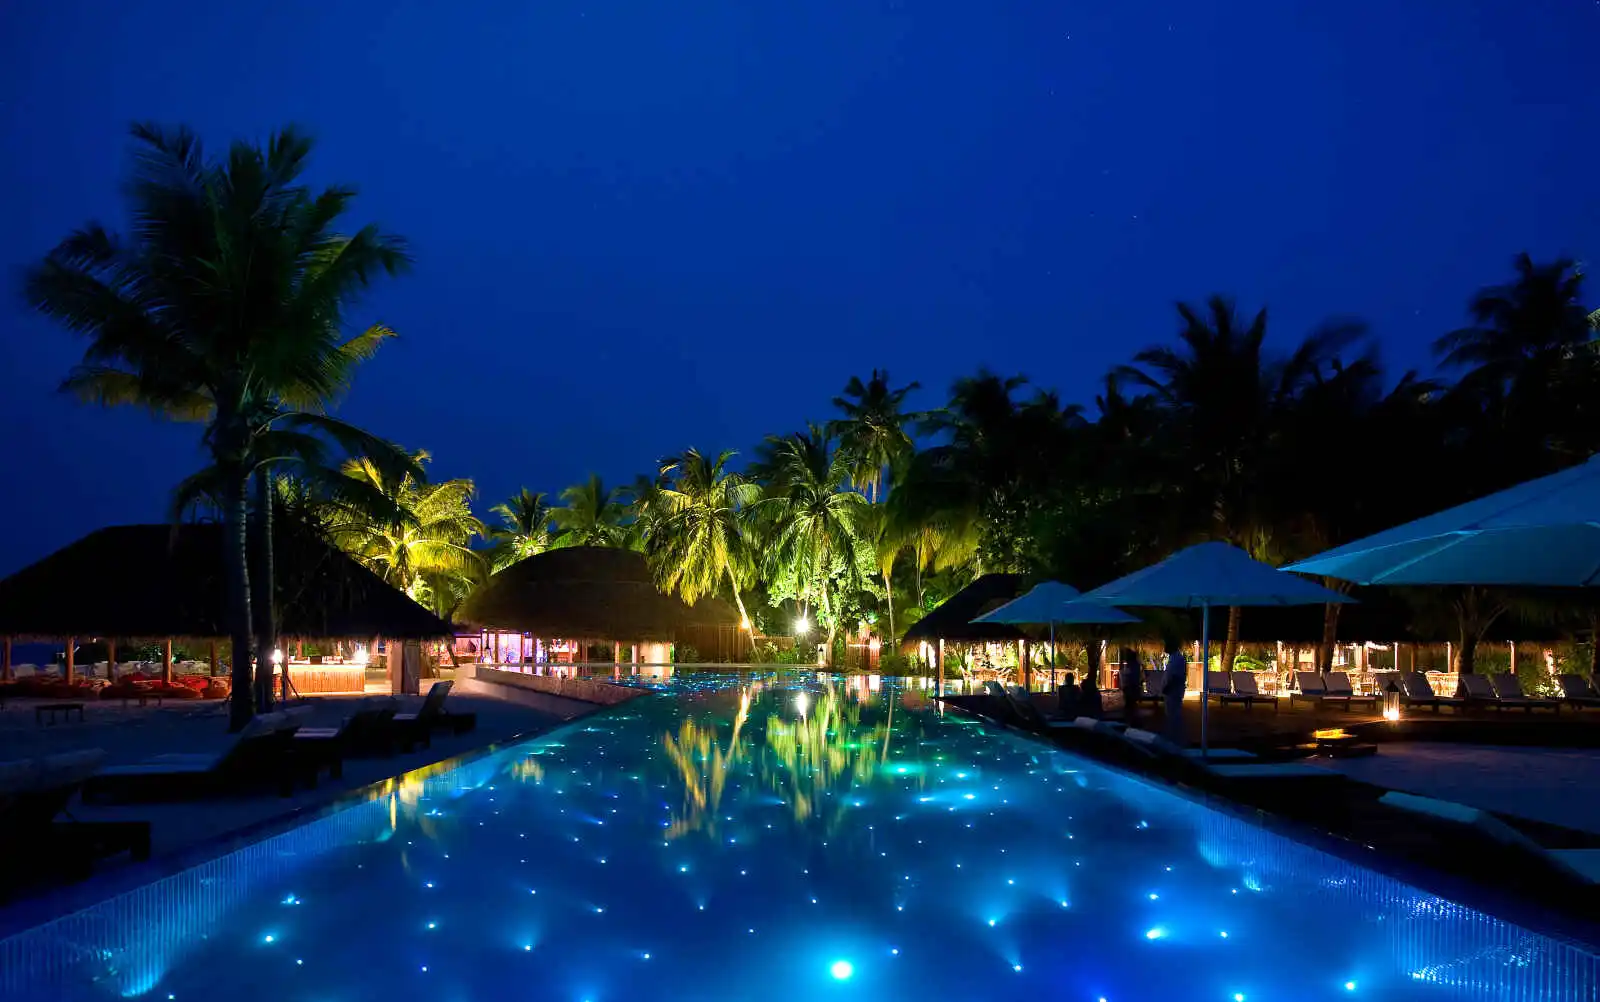 Piscine de l'hôtel de nuit, Kuramathi Maldives